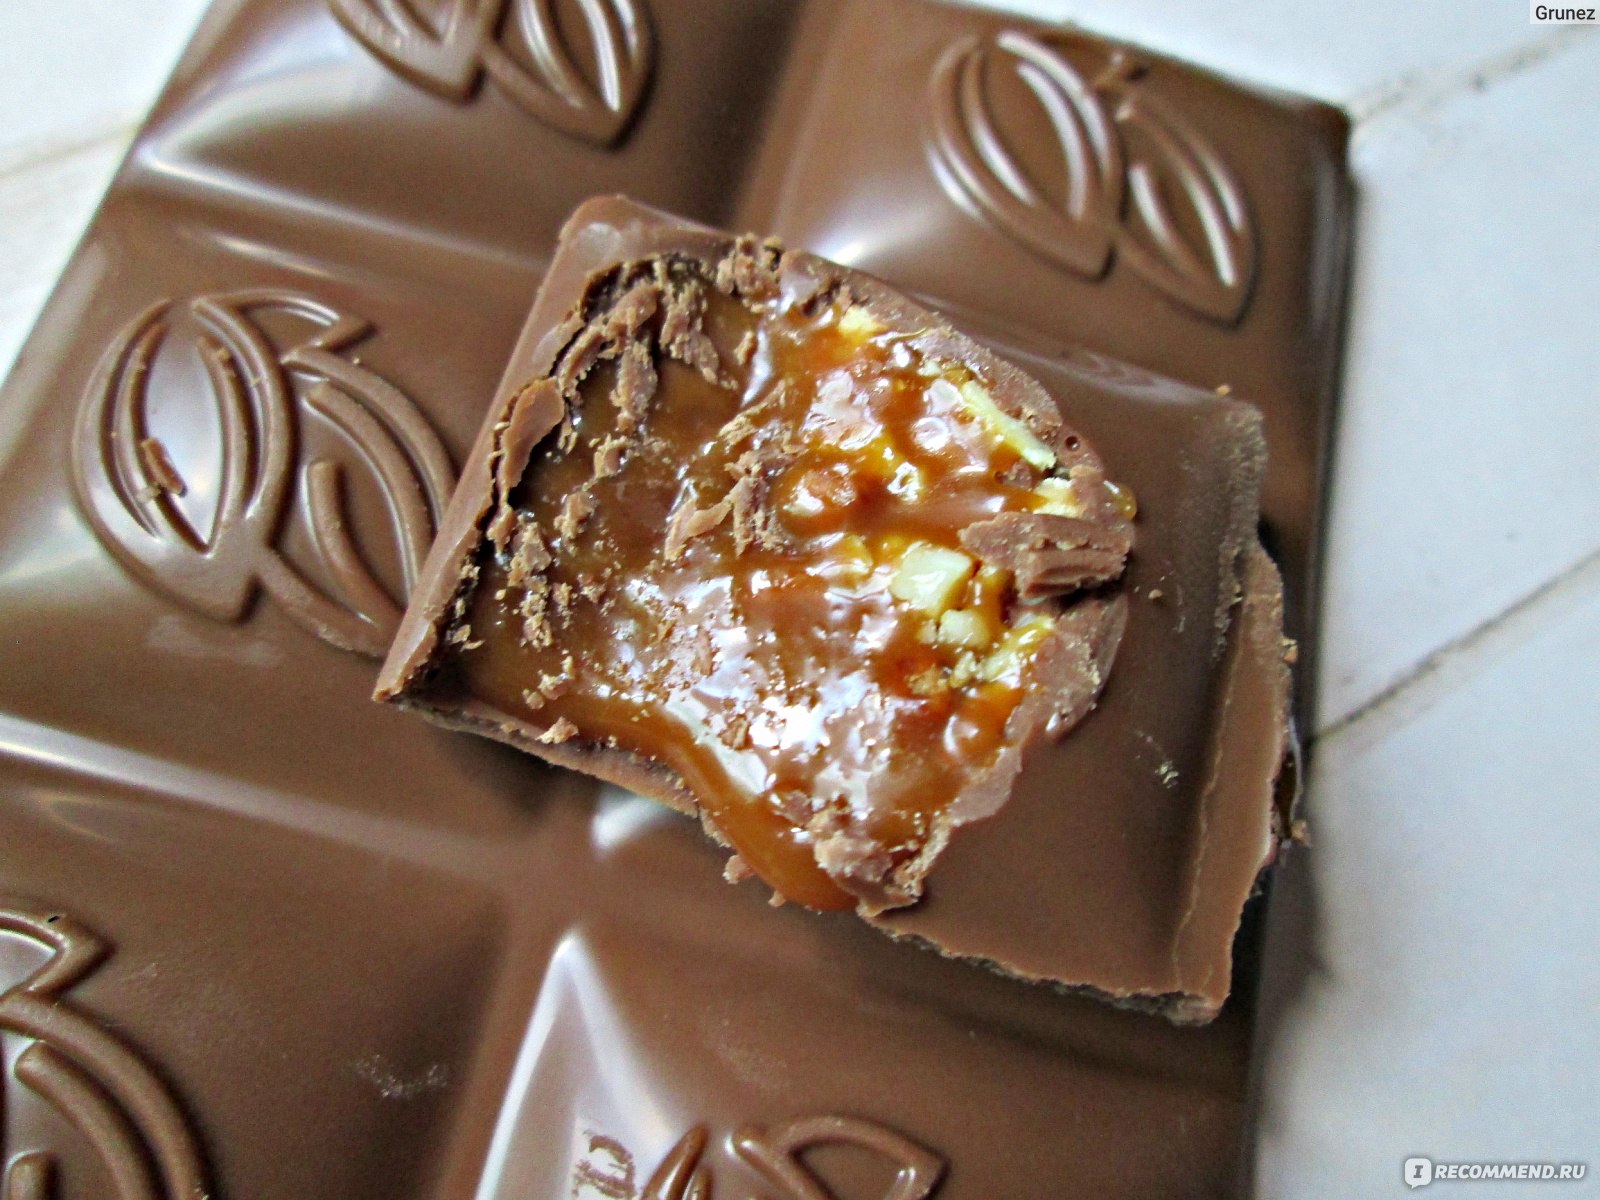 Шоколад Россия карамель арахис